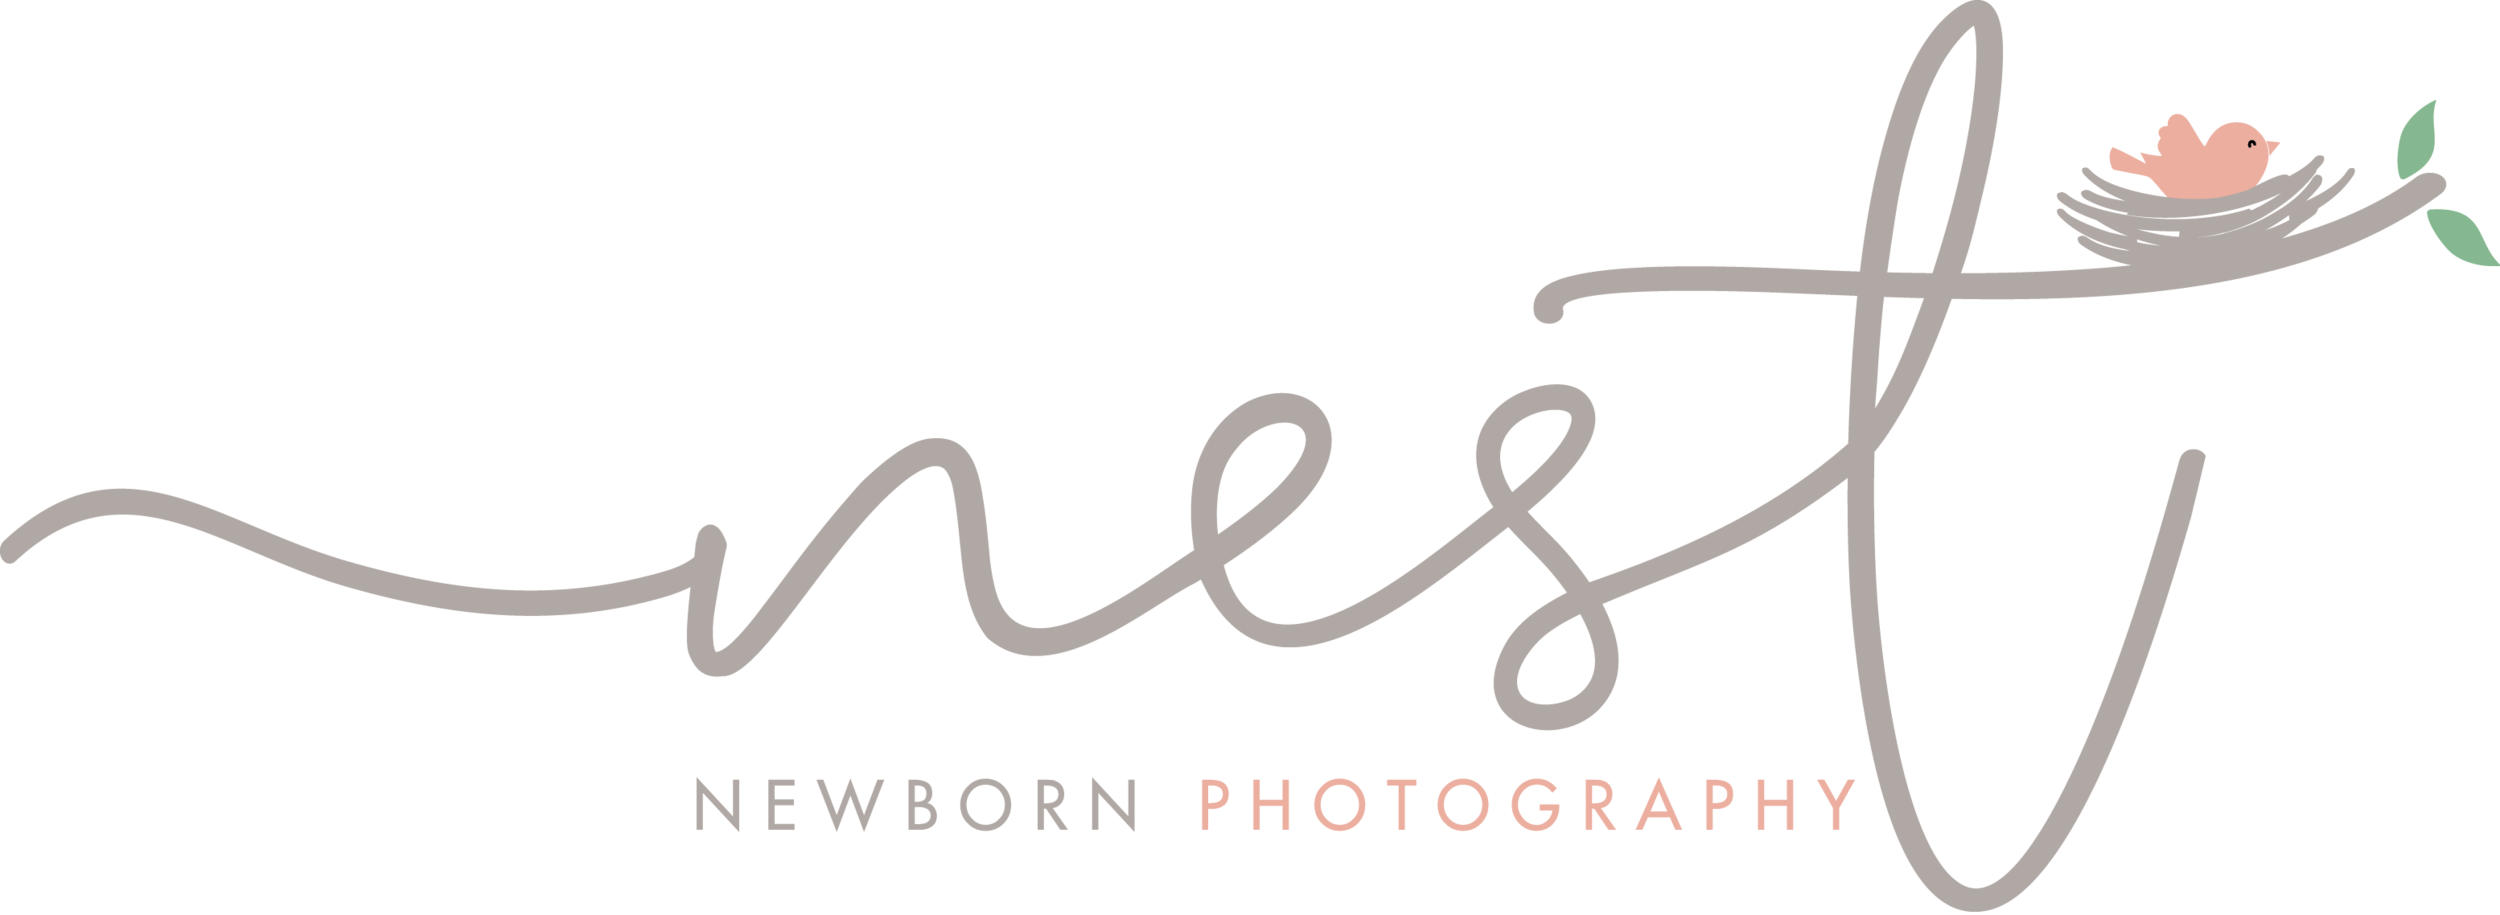 Nest Newborns | Newborn Photography &amp; Maternity Photography Dallas Fort Worth